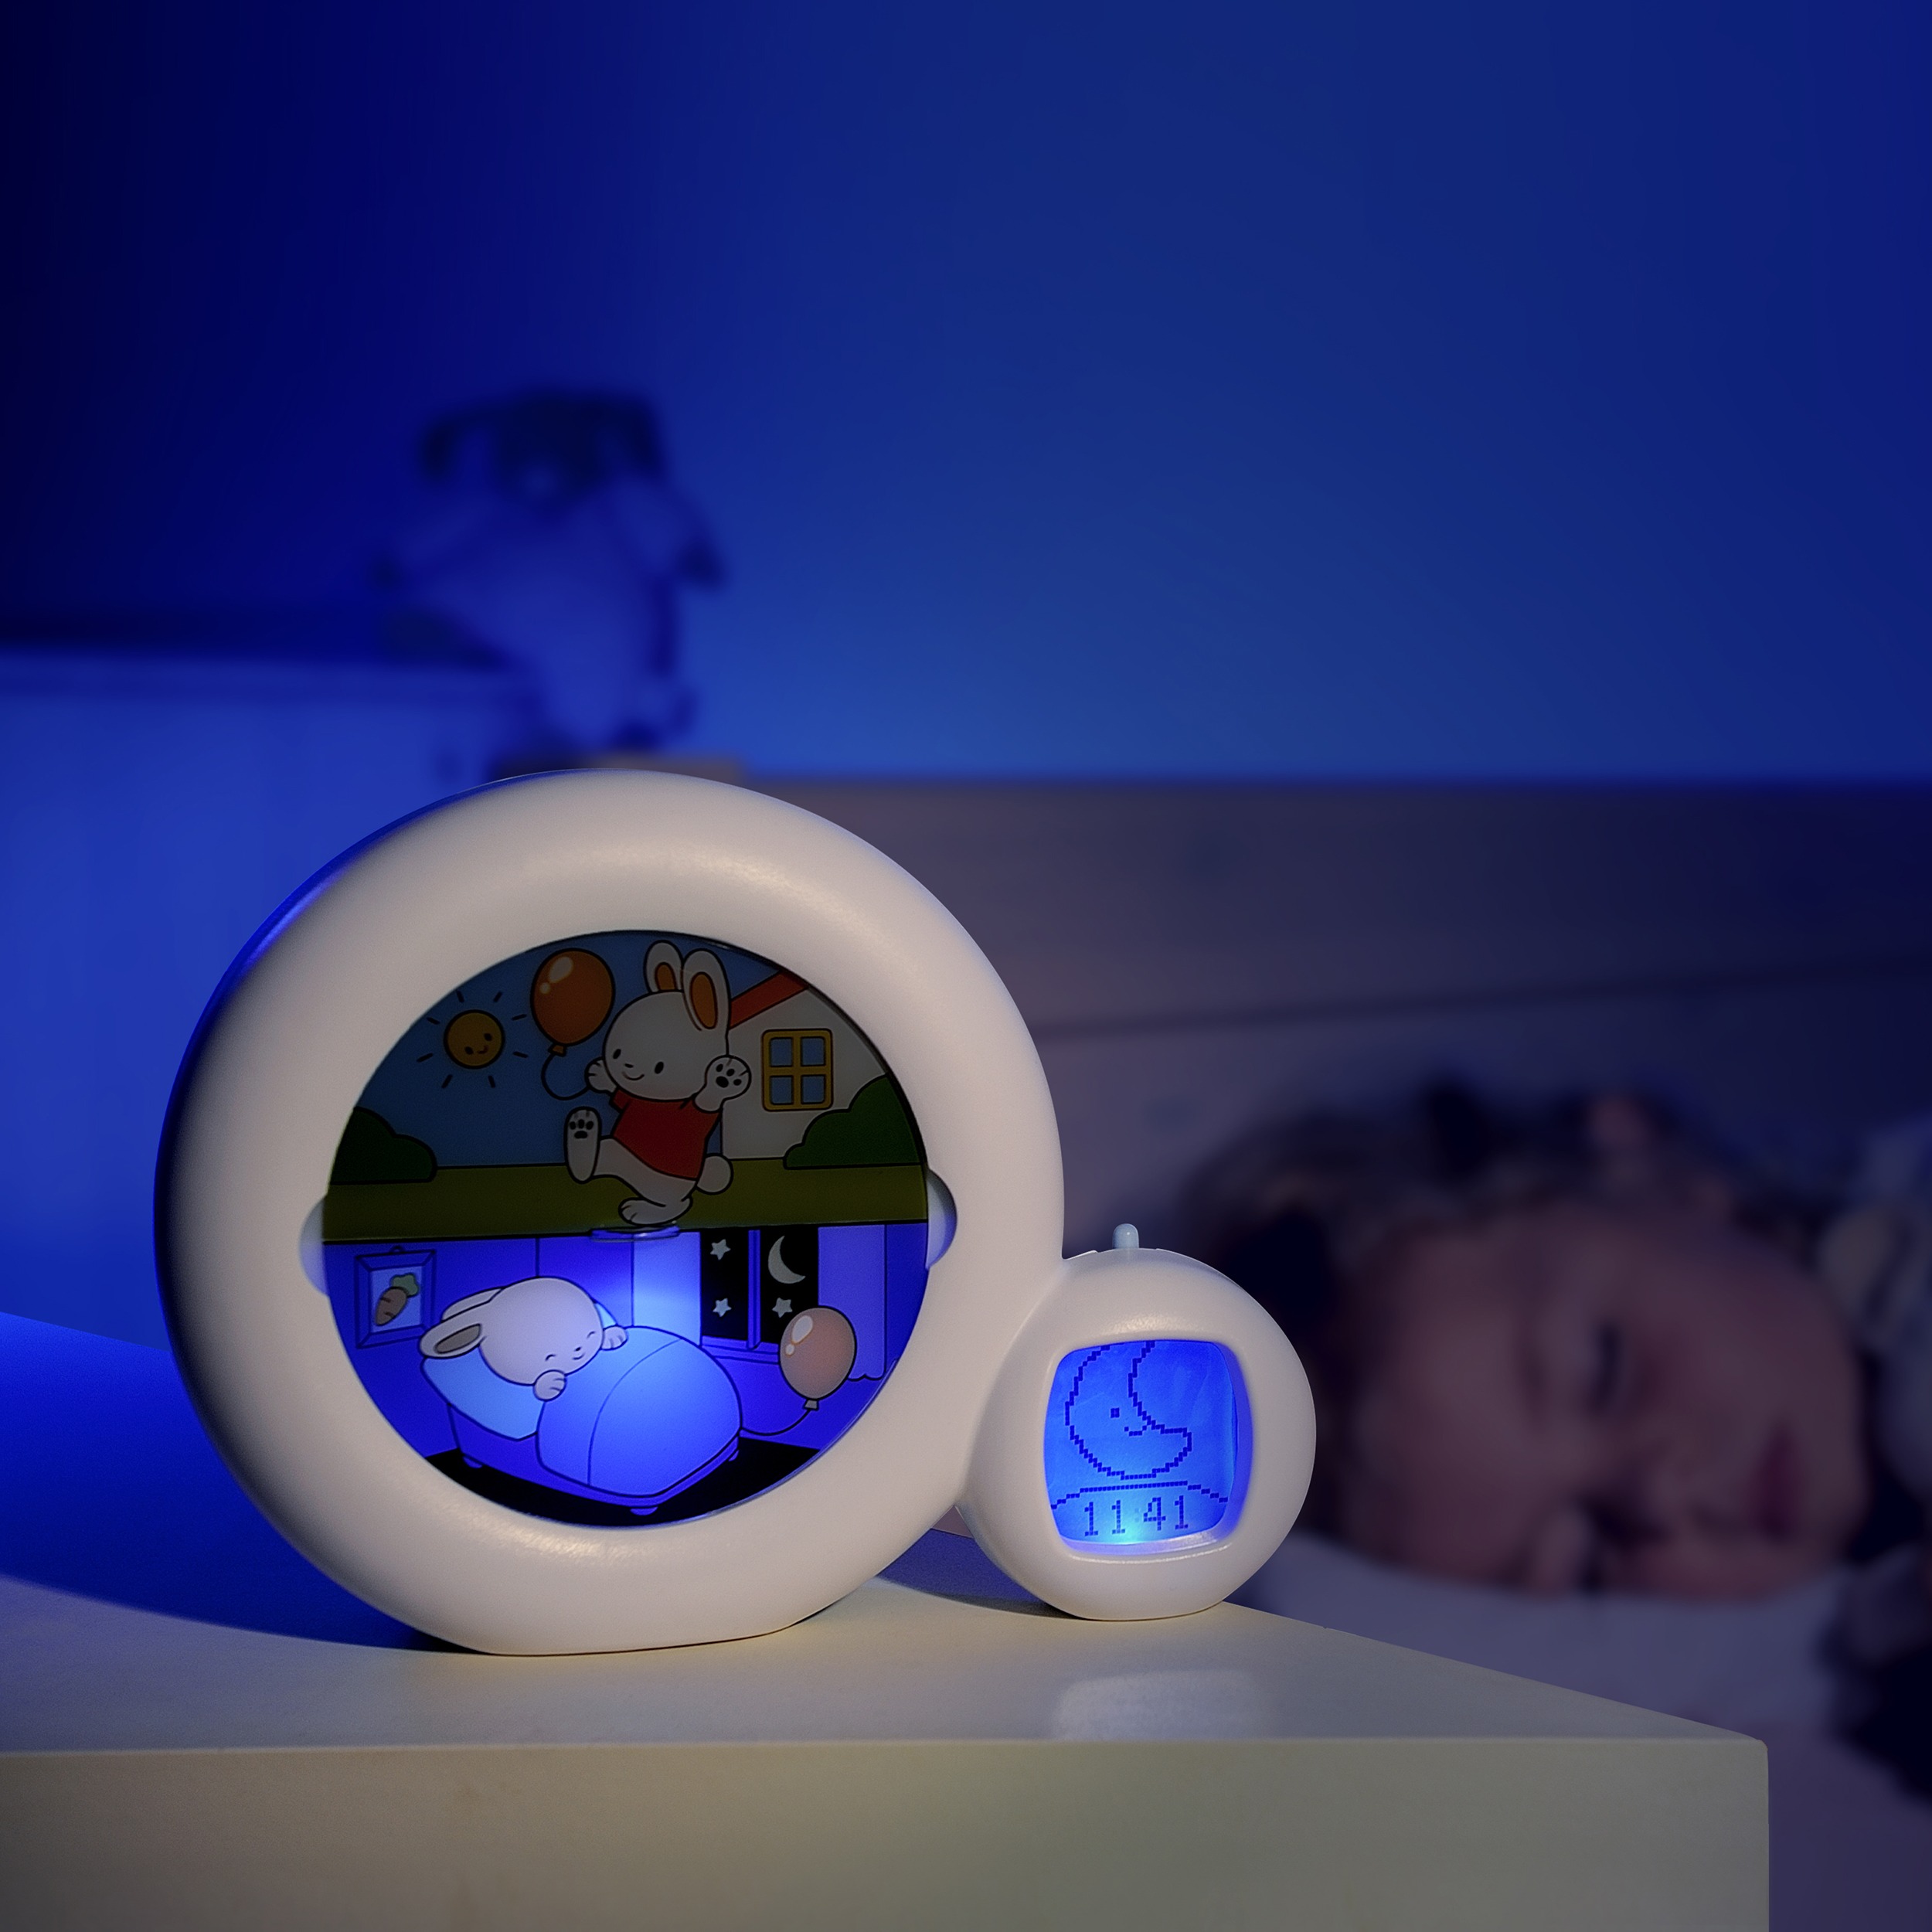 LILIKIM – Mon premier réveil kid sleep clock bleu Fonctionnalit�s